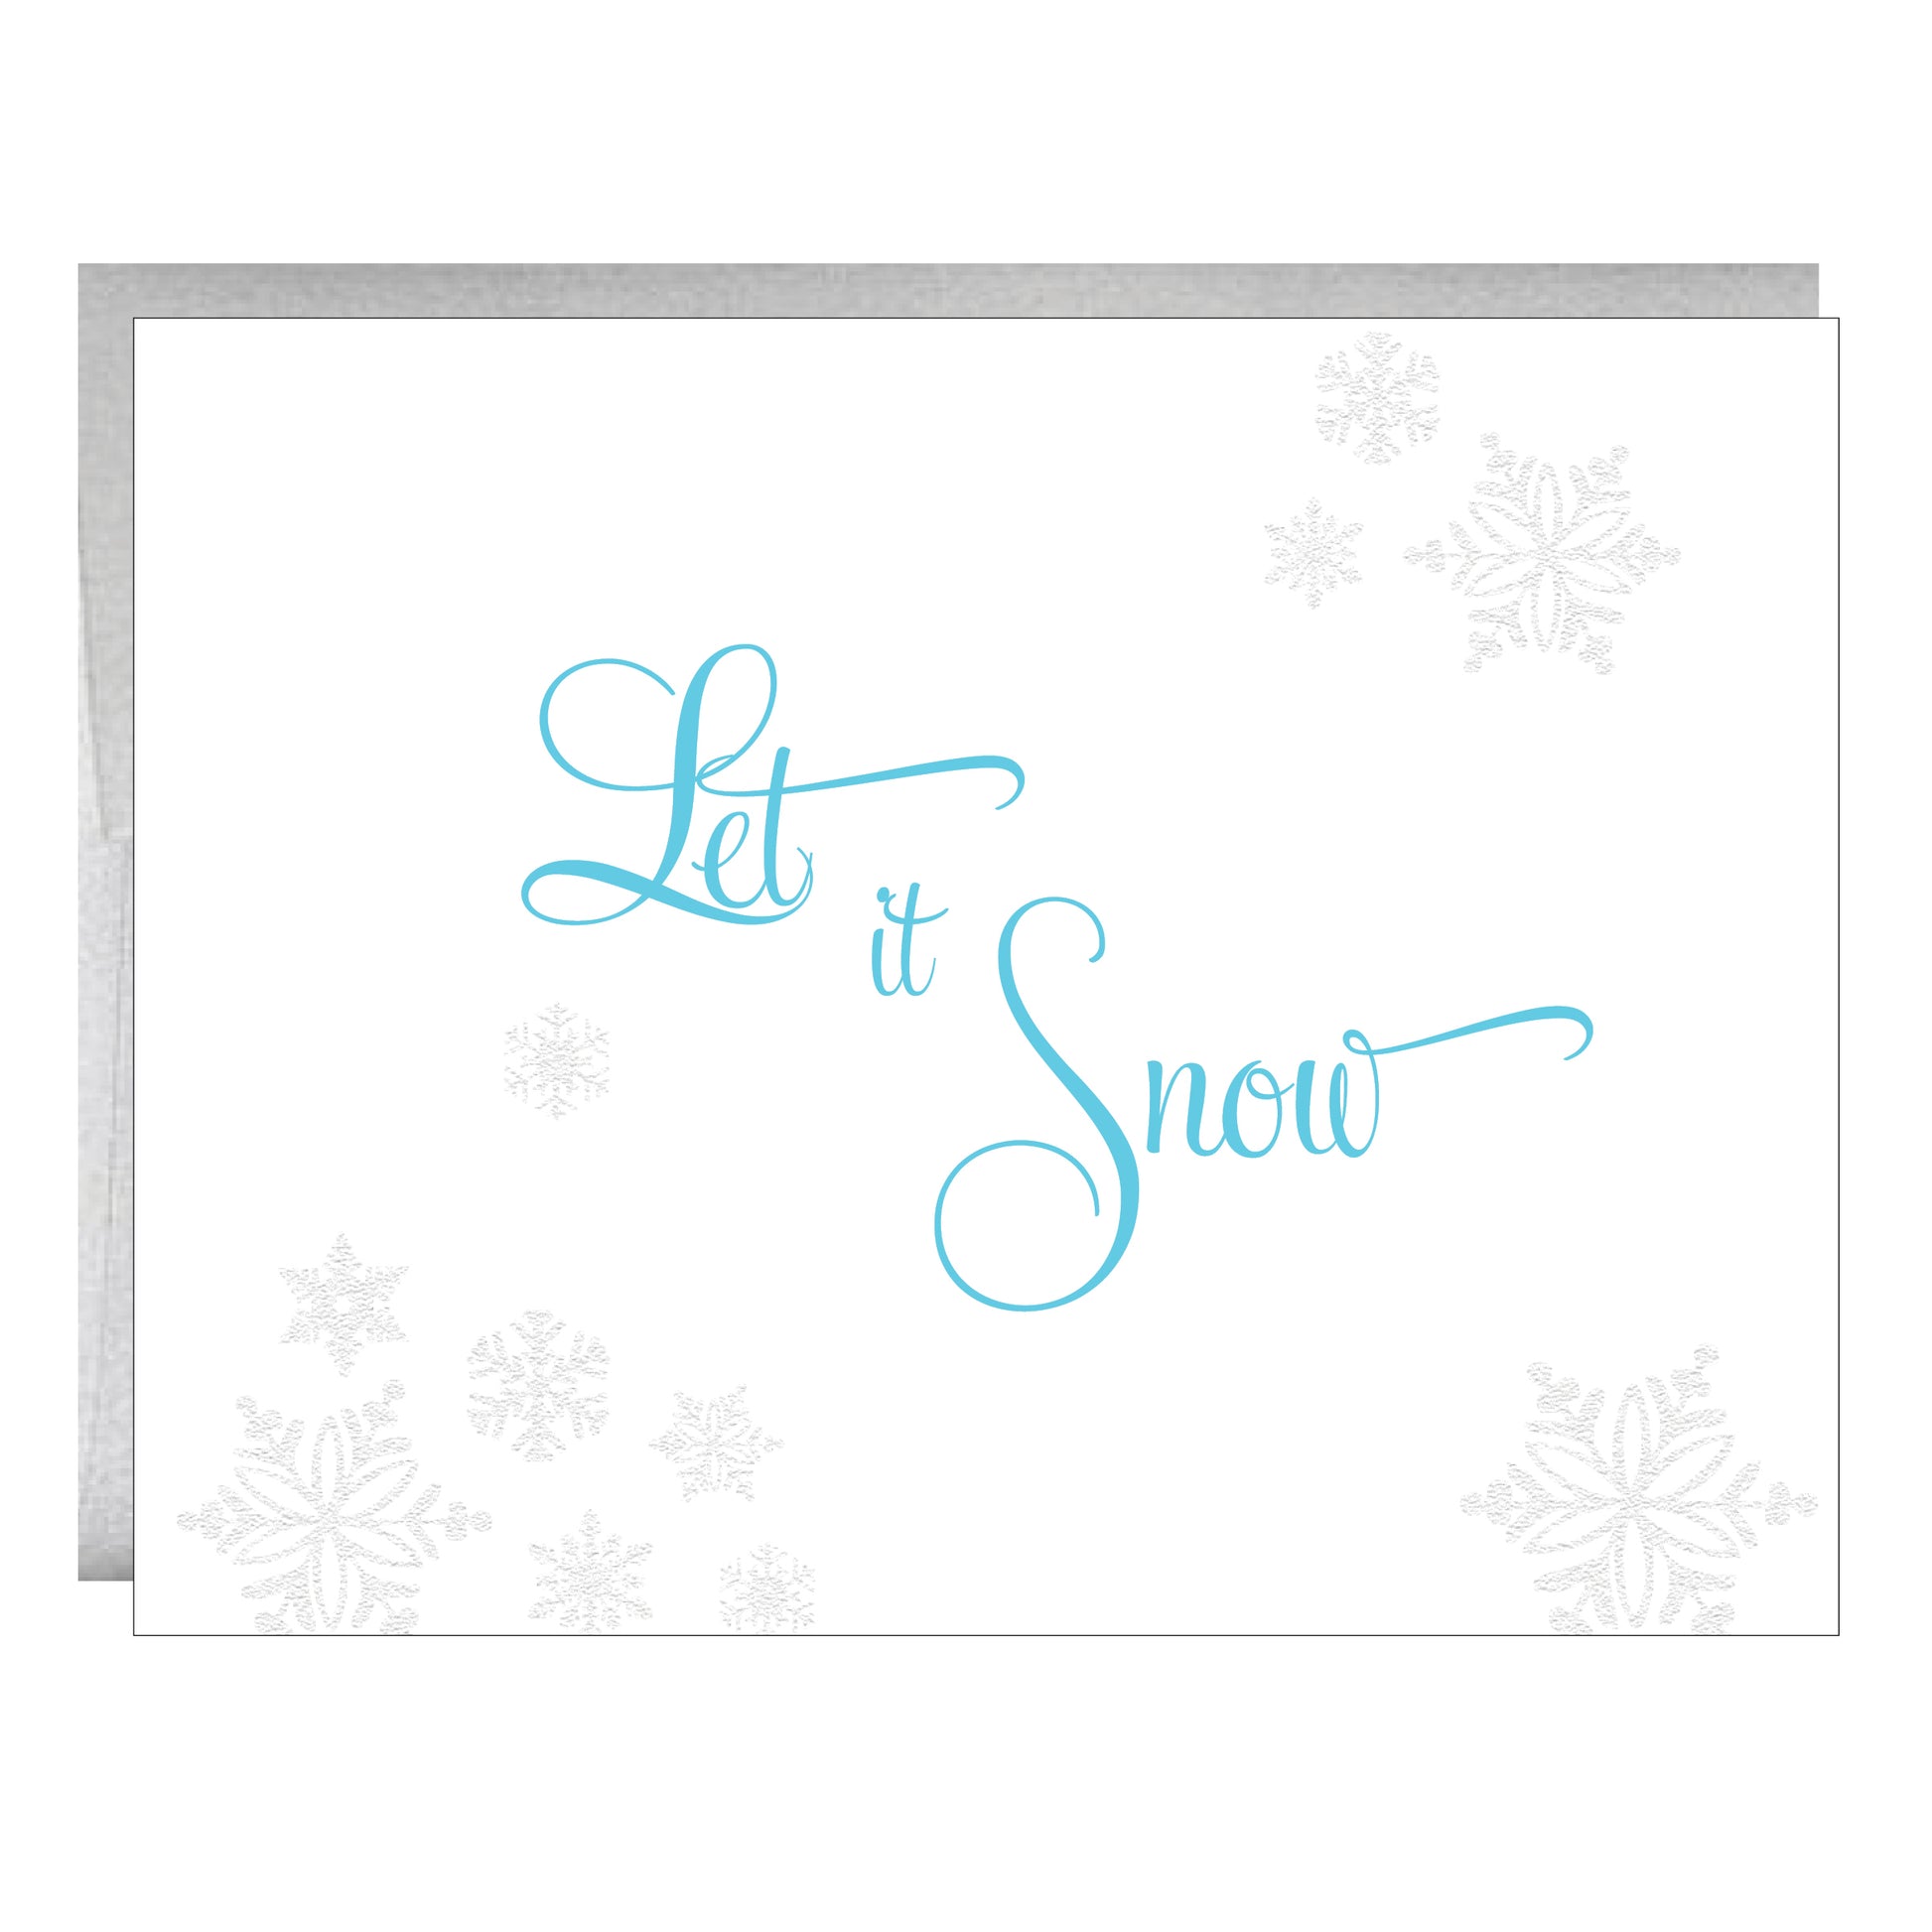 Let it Snow letterpress printed Holiday Cards - 5 pack - Idea Chíc